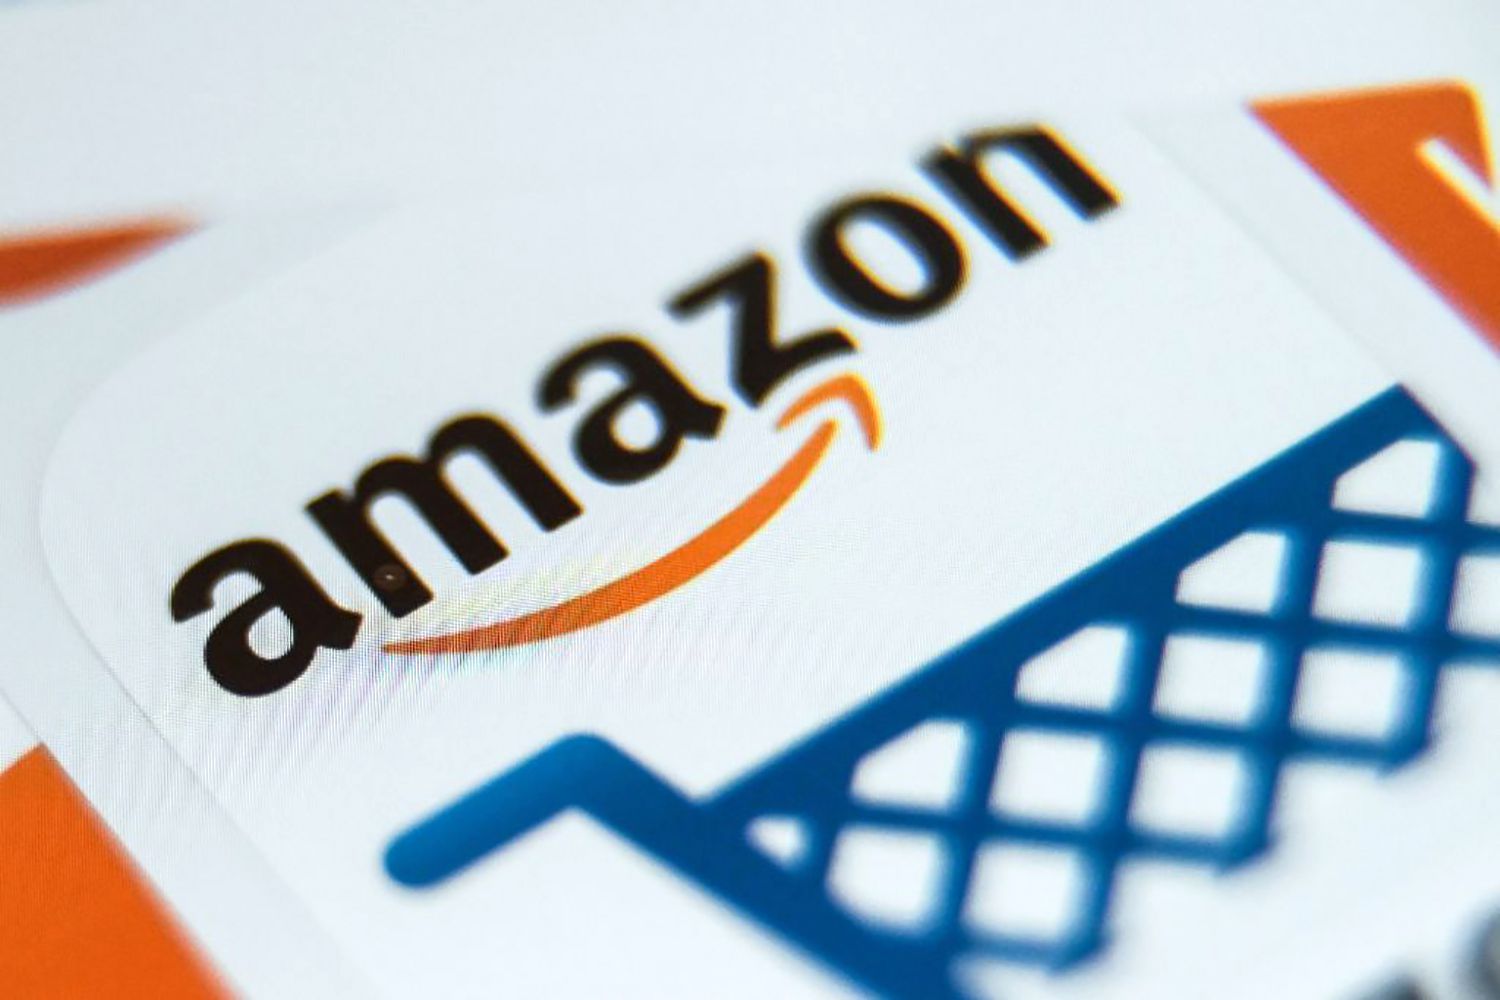 Amazon logo and a blue shopping cart